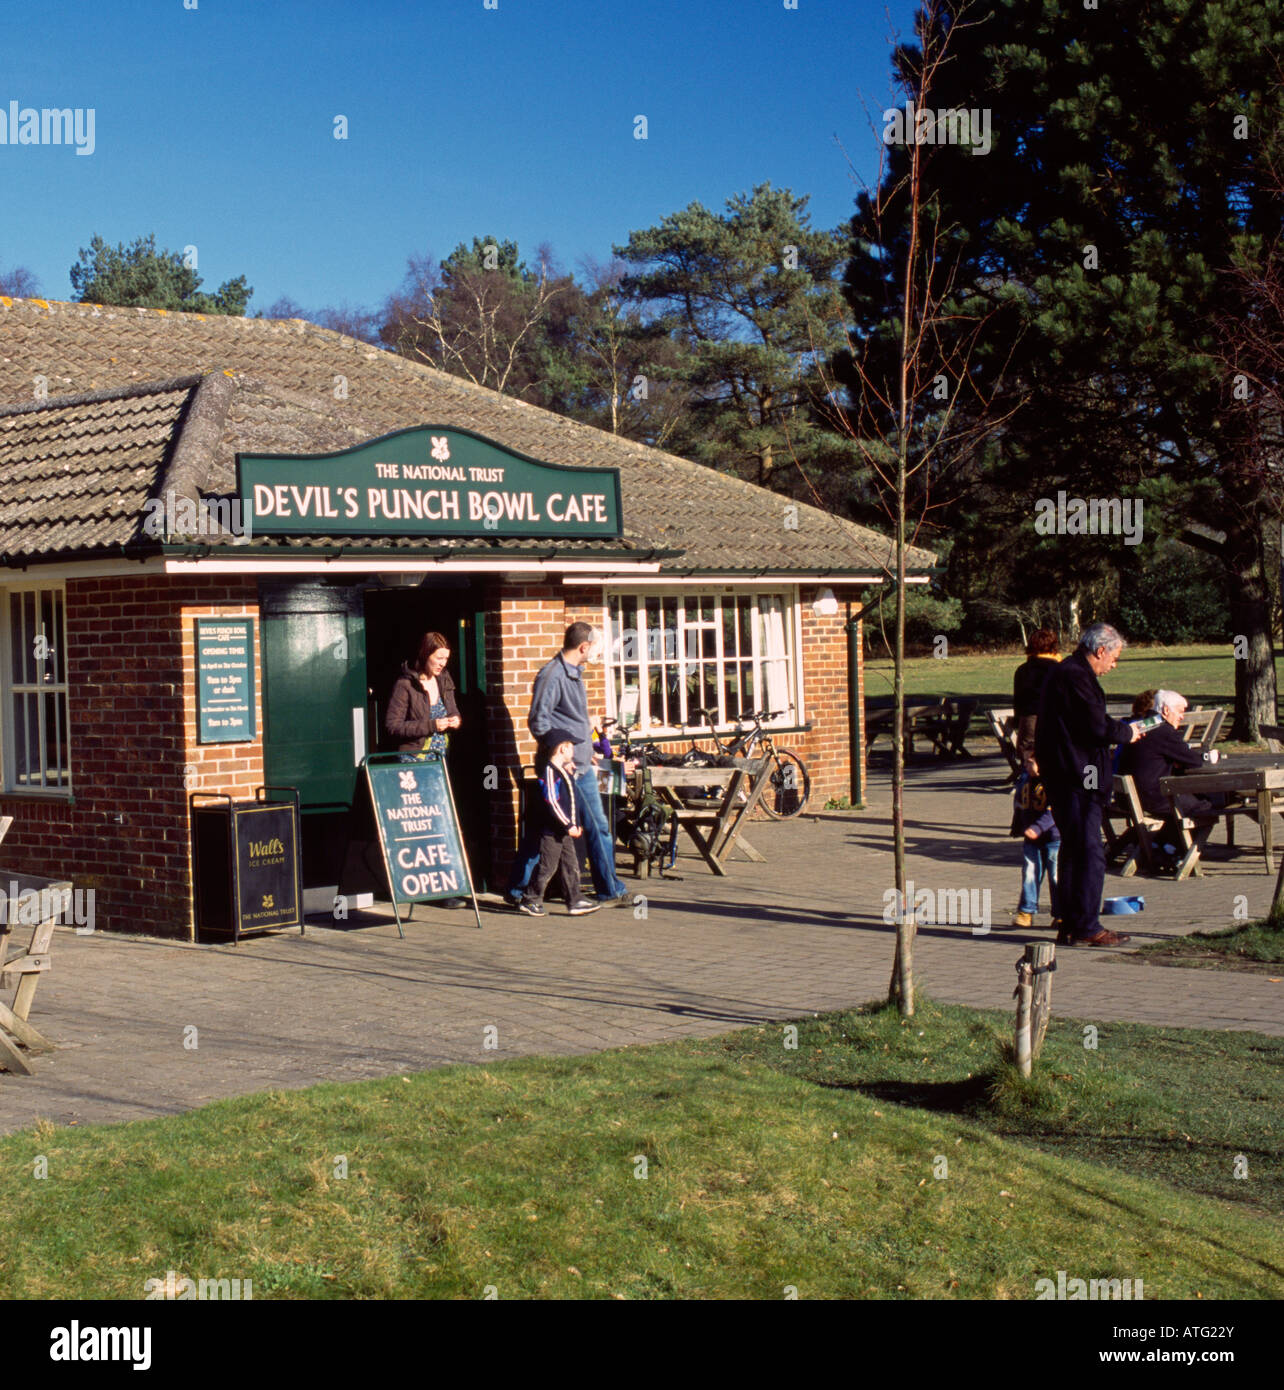 The Devils Punch Bowl Cafe Hindhead Surrey England UK. Stock Photo